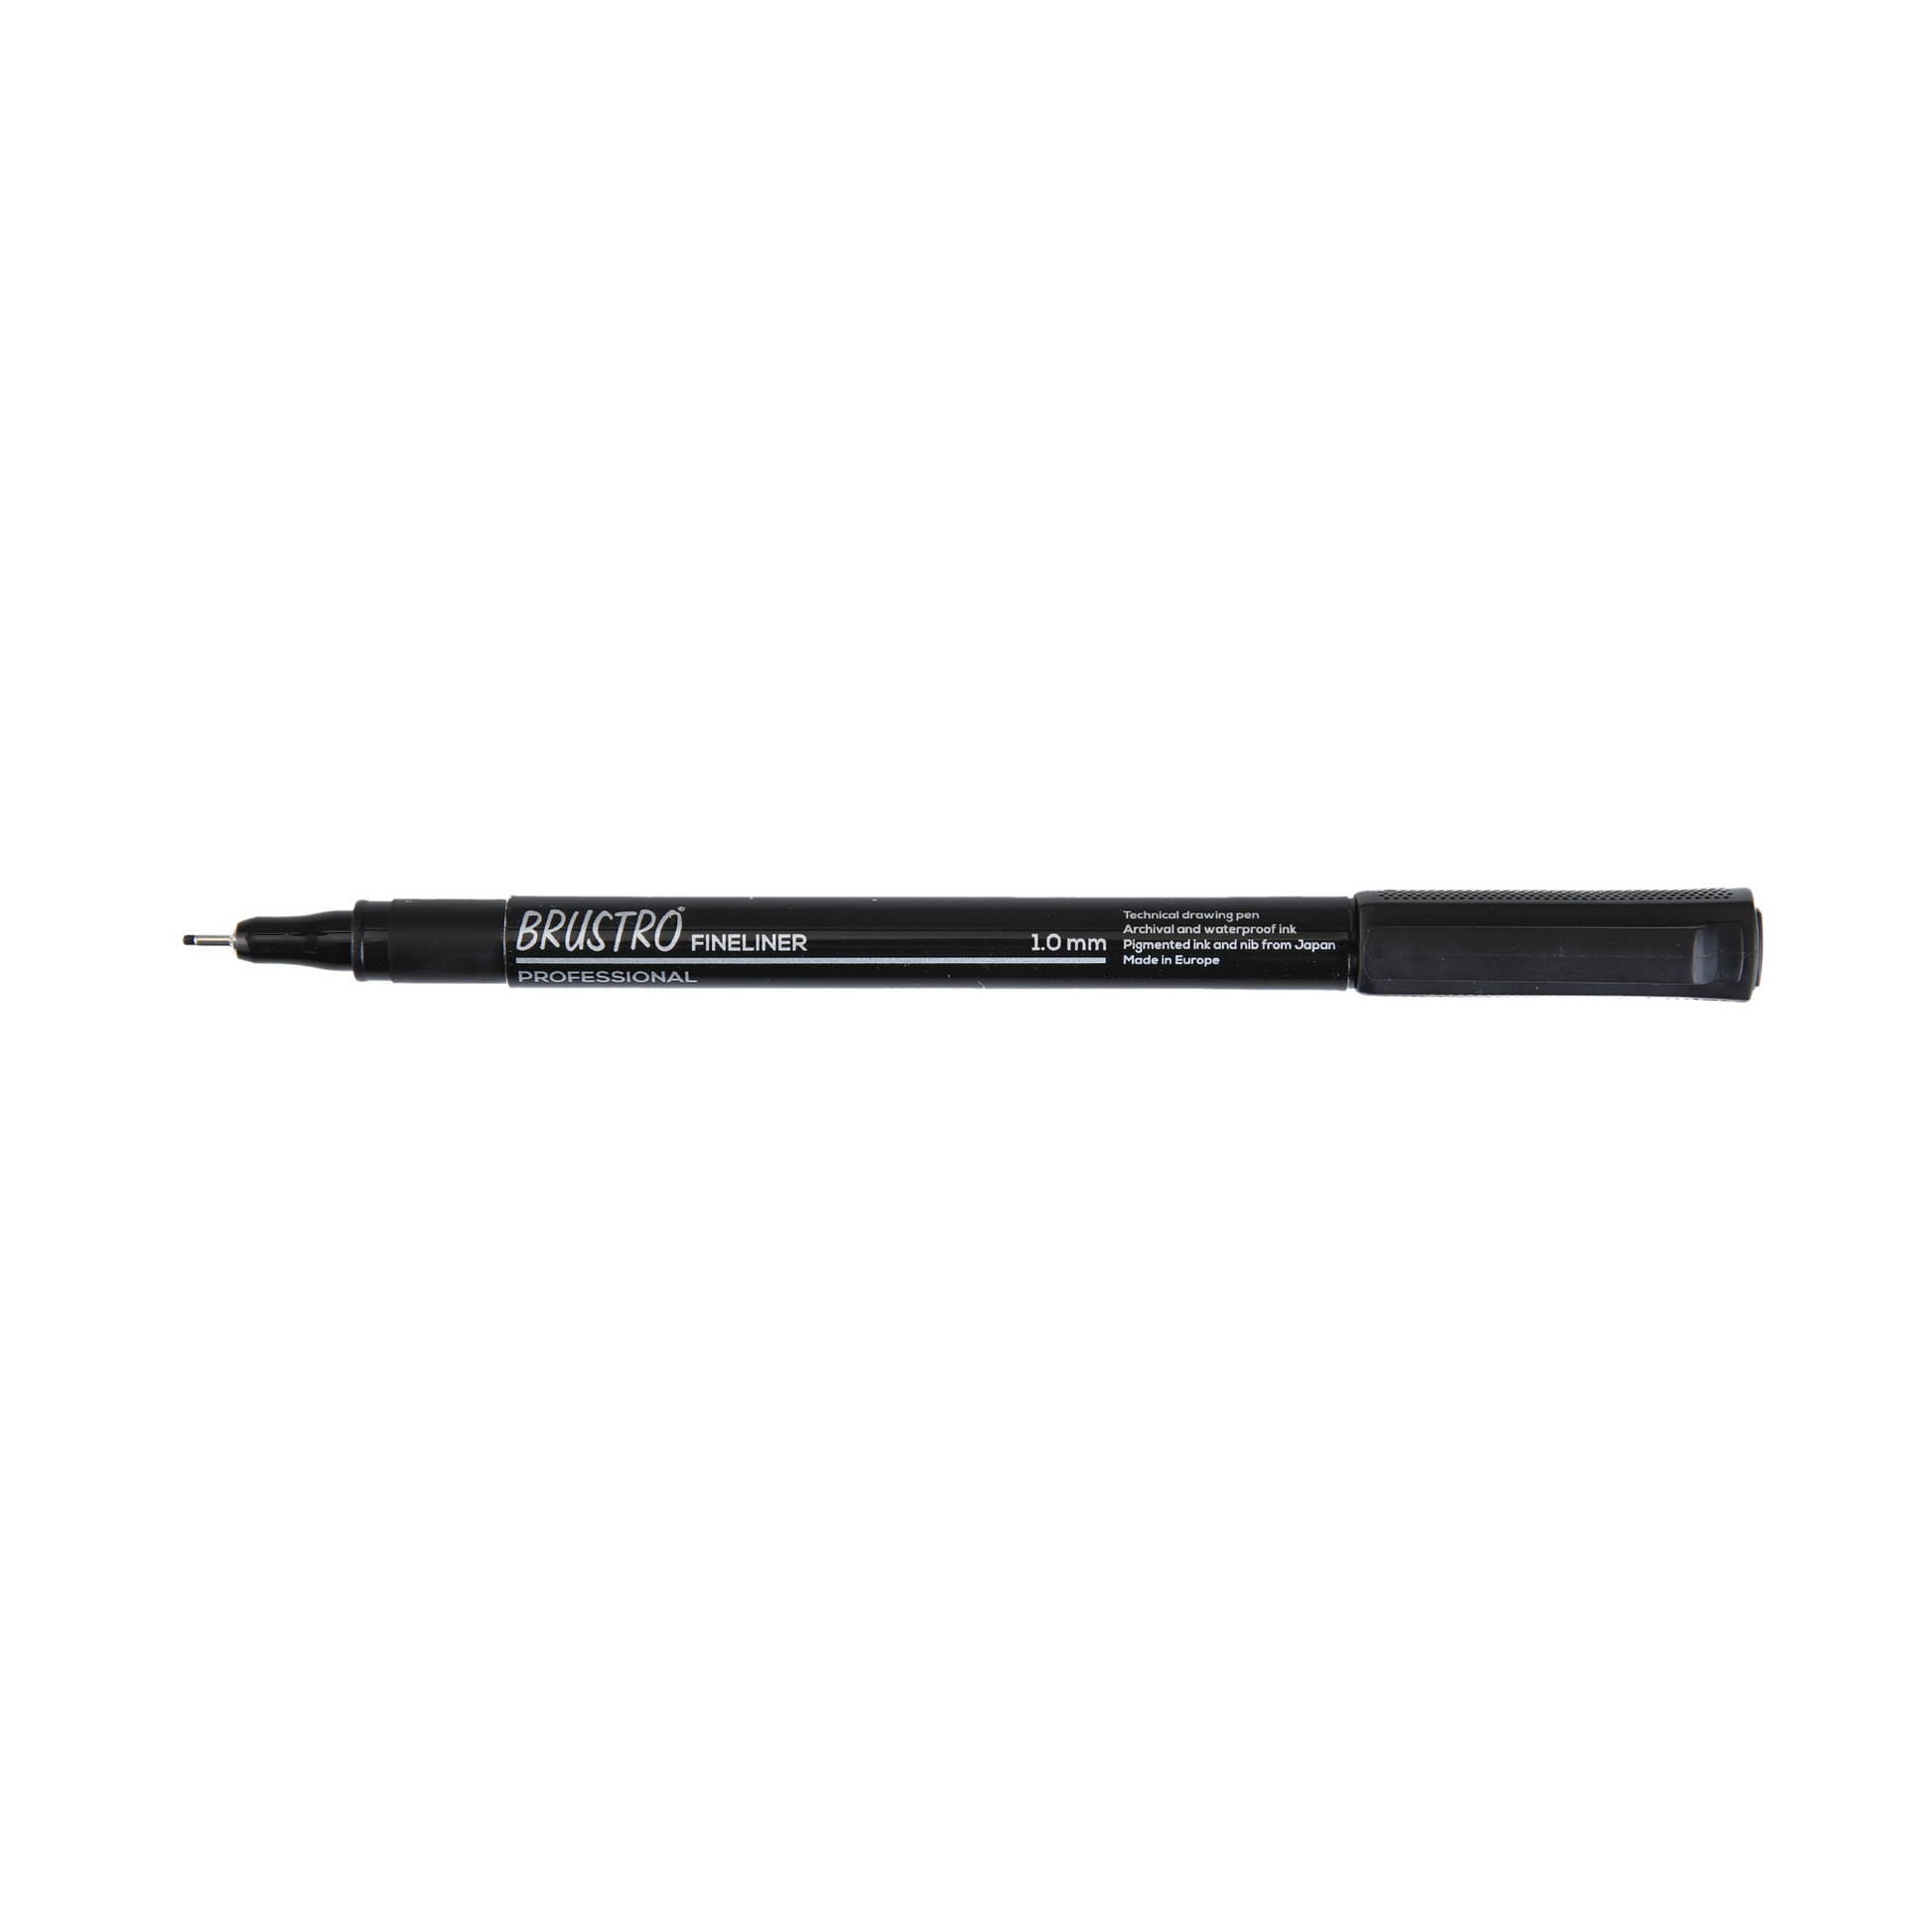 Drawing Pens Set Of 8 Black Fineliners Waterproof Ink Technical